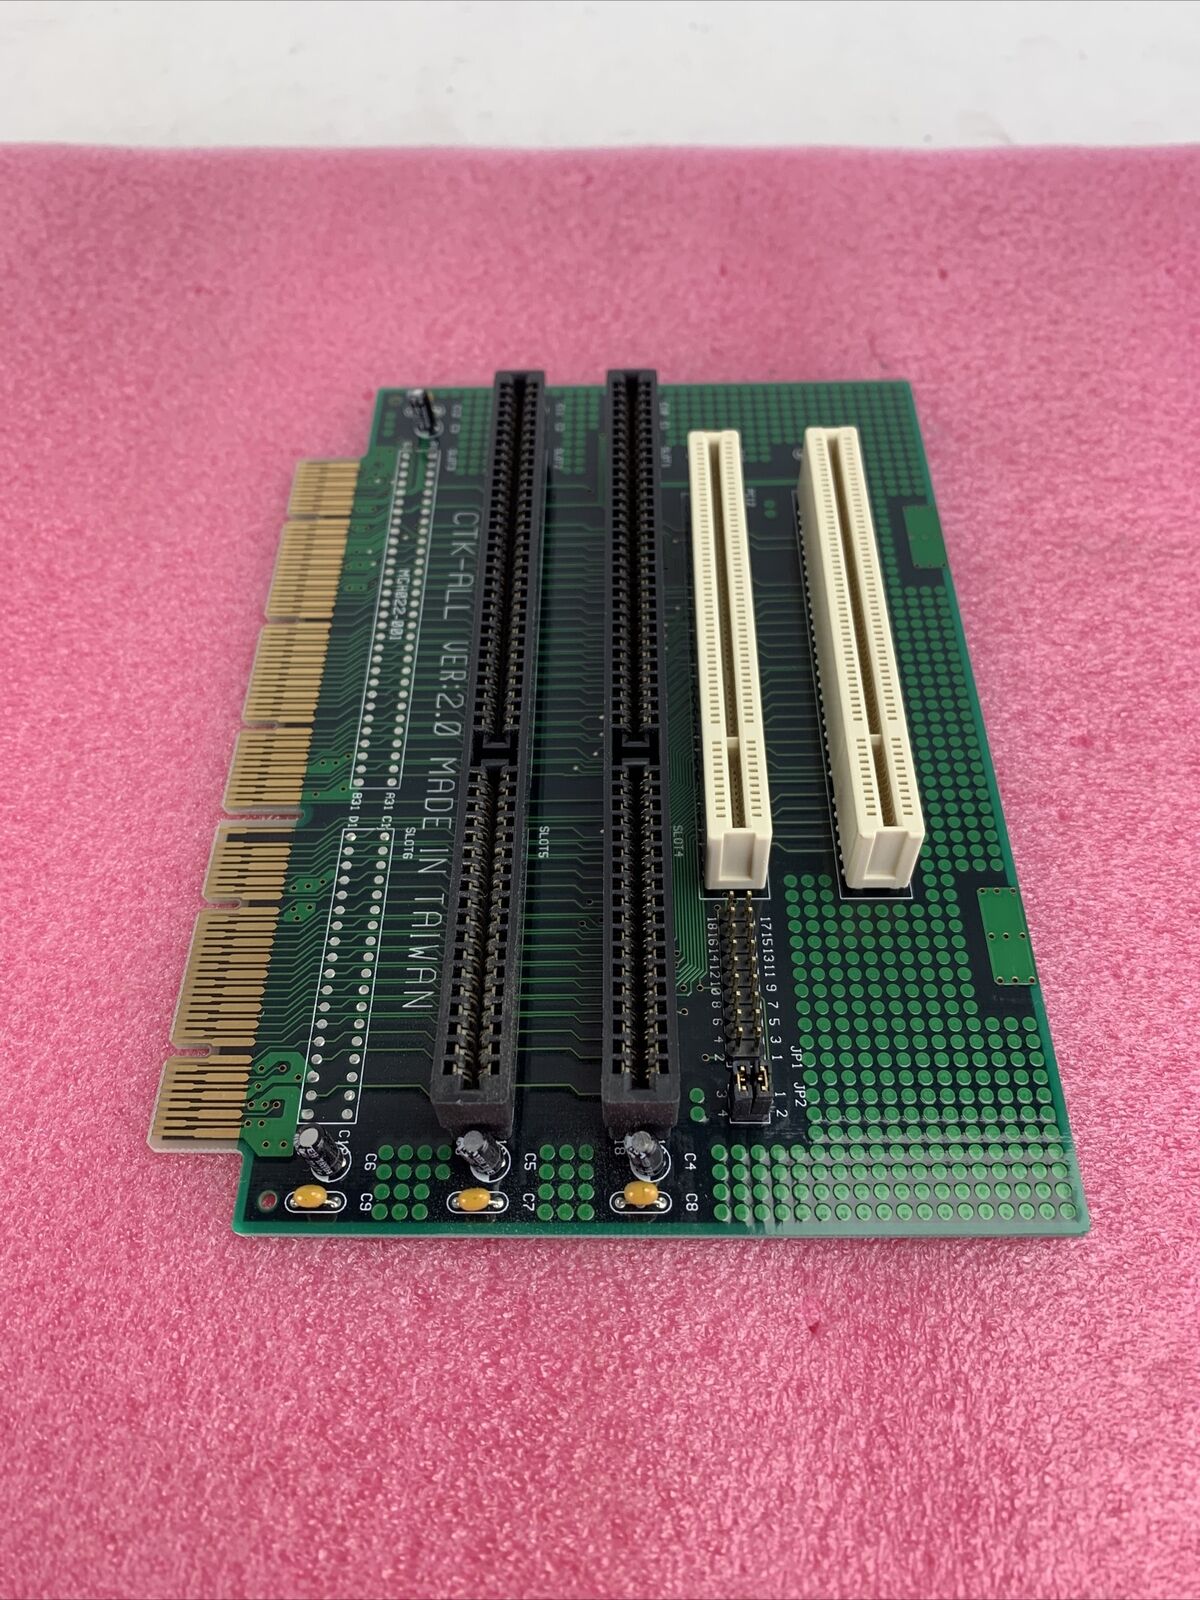 ACER CTK-ALL VER 2.0 2 ISA 2 PCI RISER CARD